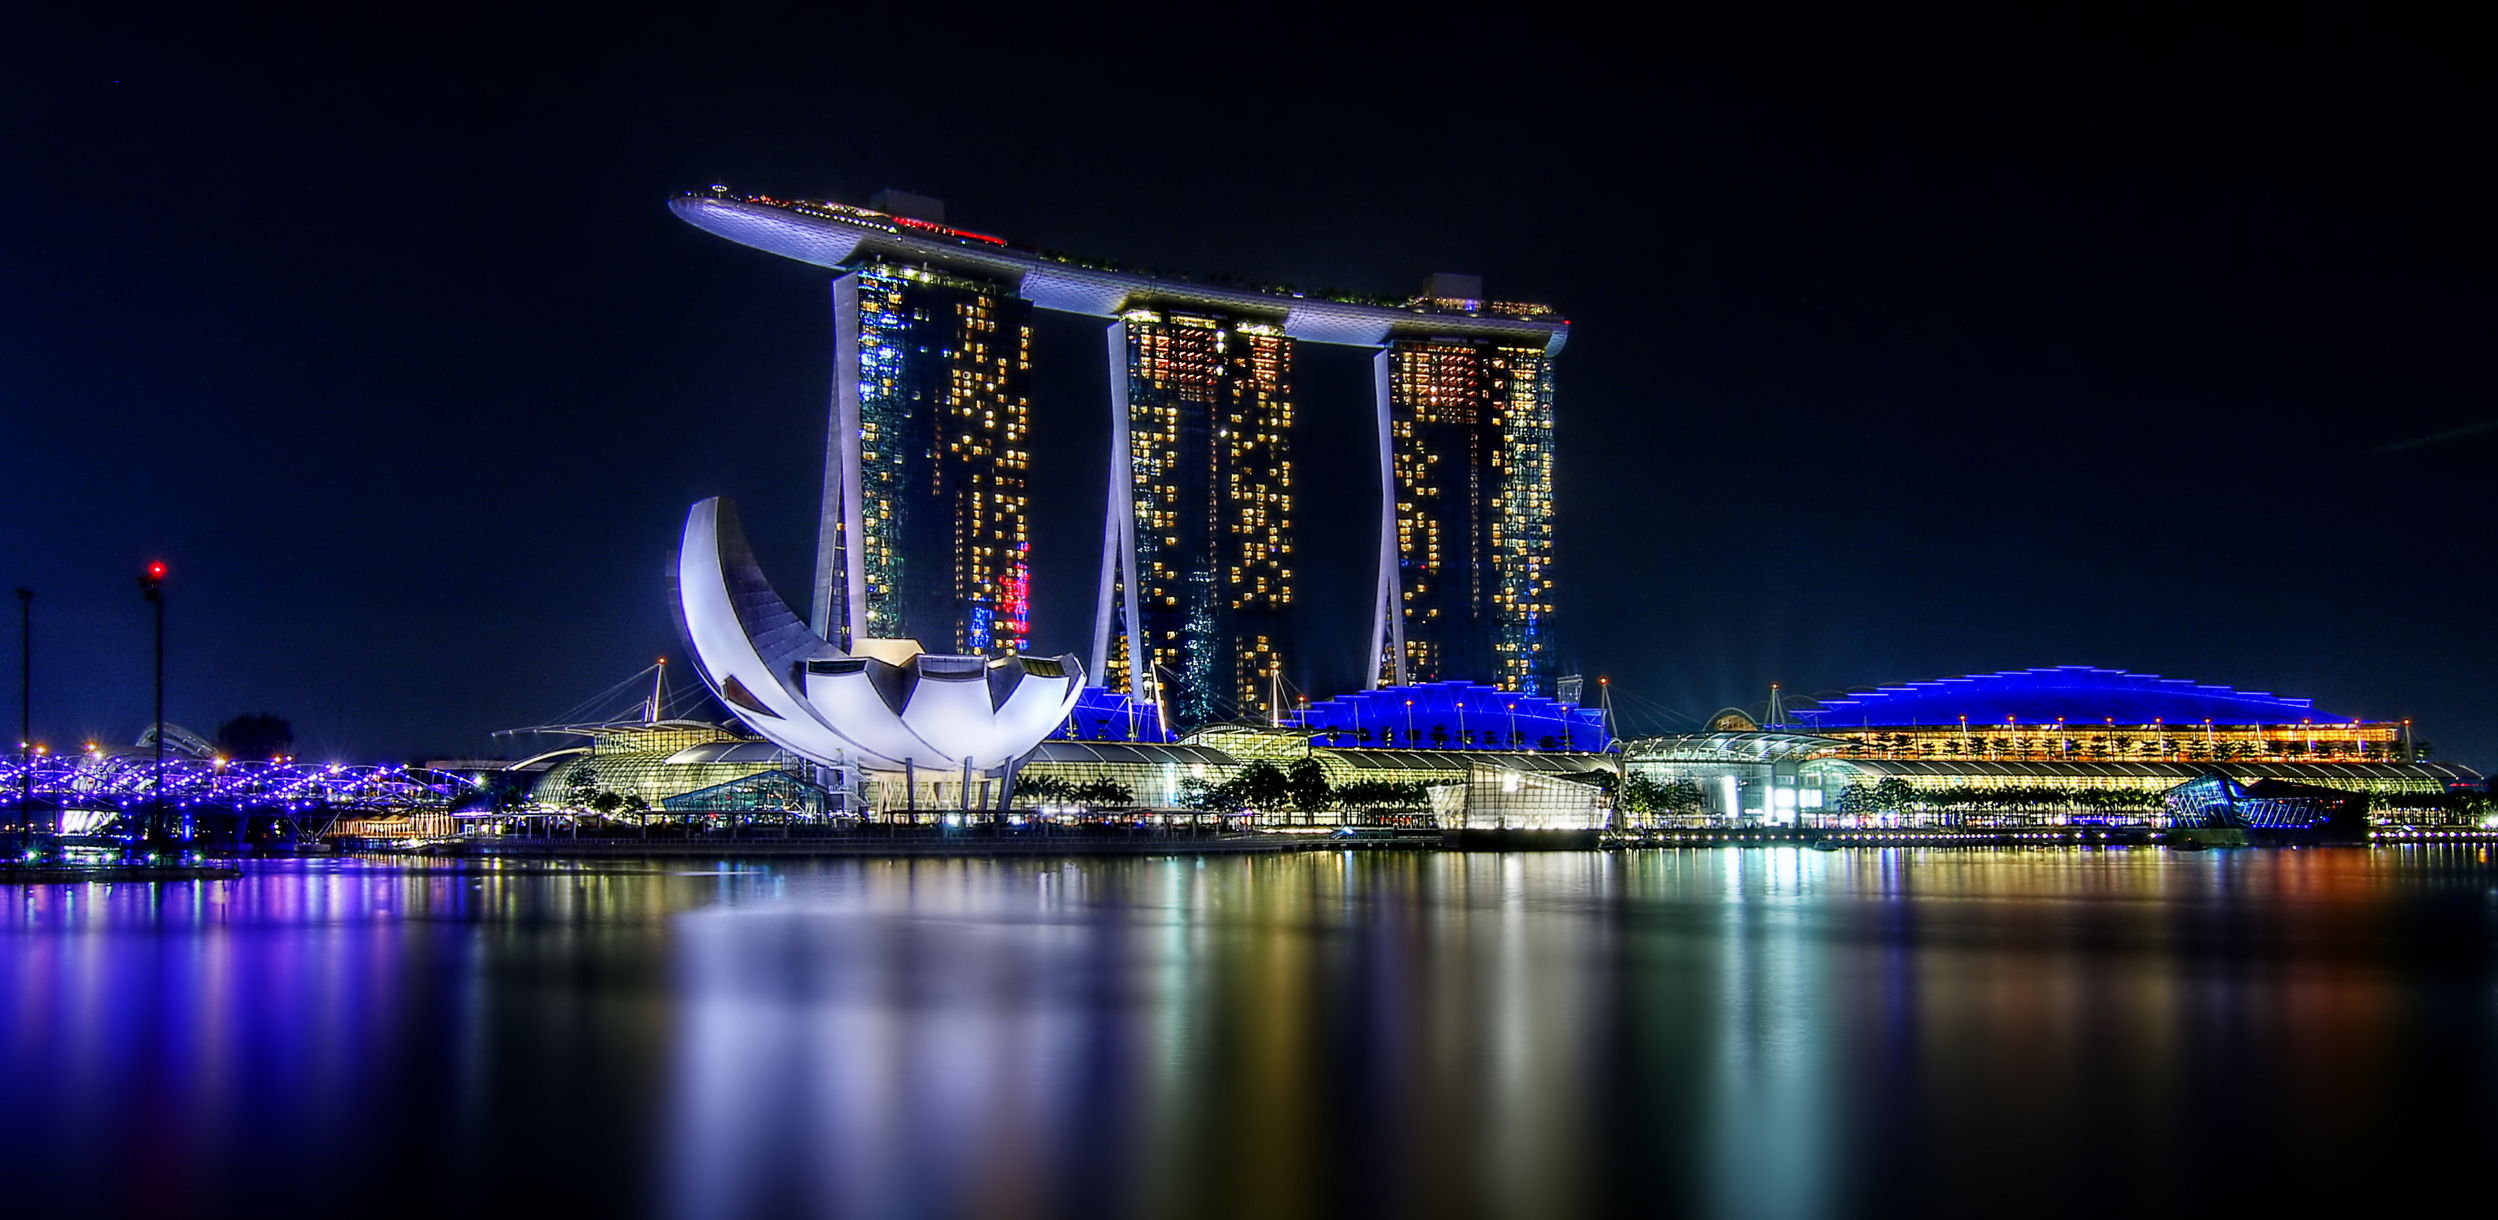 File:Marina Bay Sands, Singapore (8351775641).jpg - Wikimedia Commons